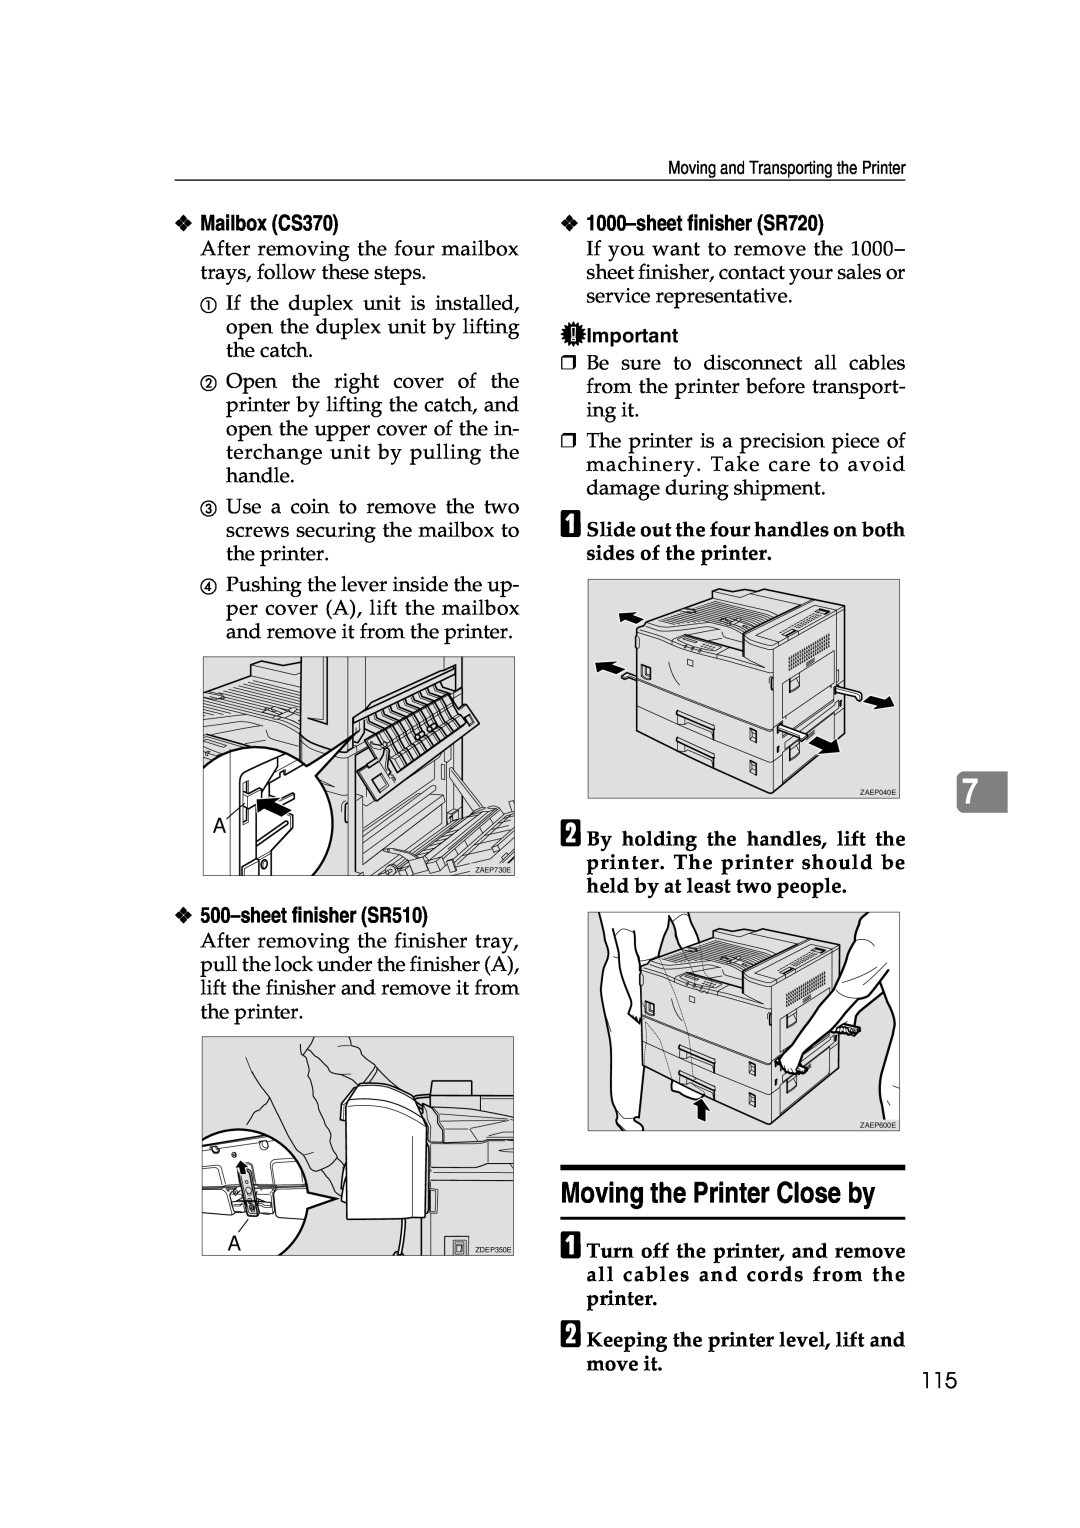 Lanier AP3200 manual Moving the Printer Close by, Mailbox CS370, 500–sheetfinisher SR510, sheetfinisher SR720 